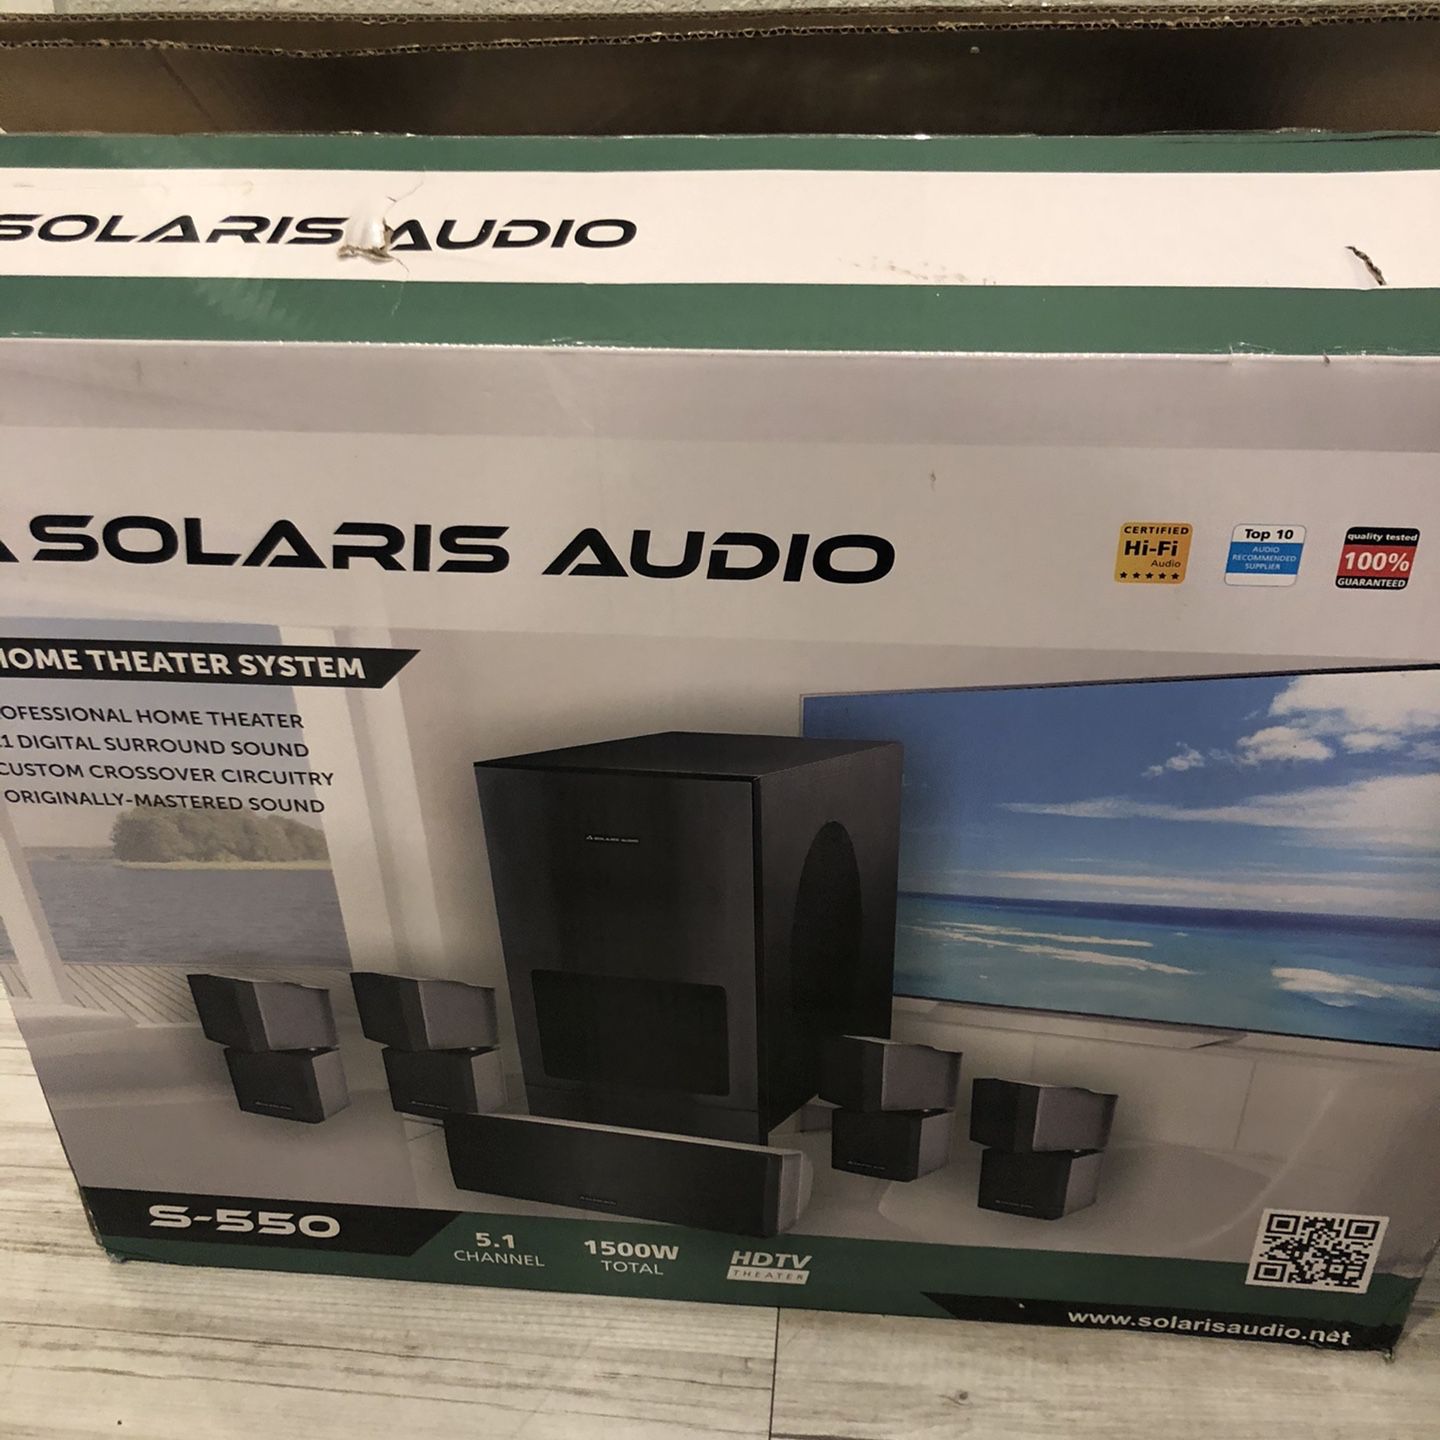 Solaris Audio S-550 Home Theater System